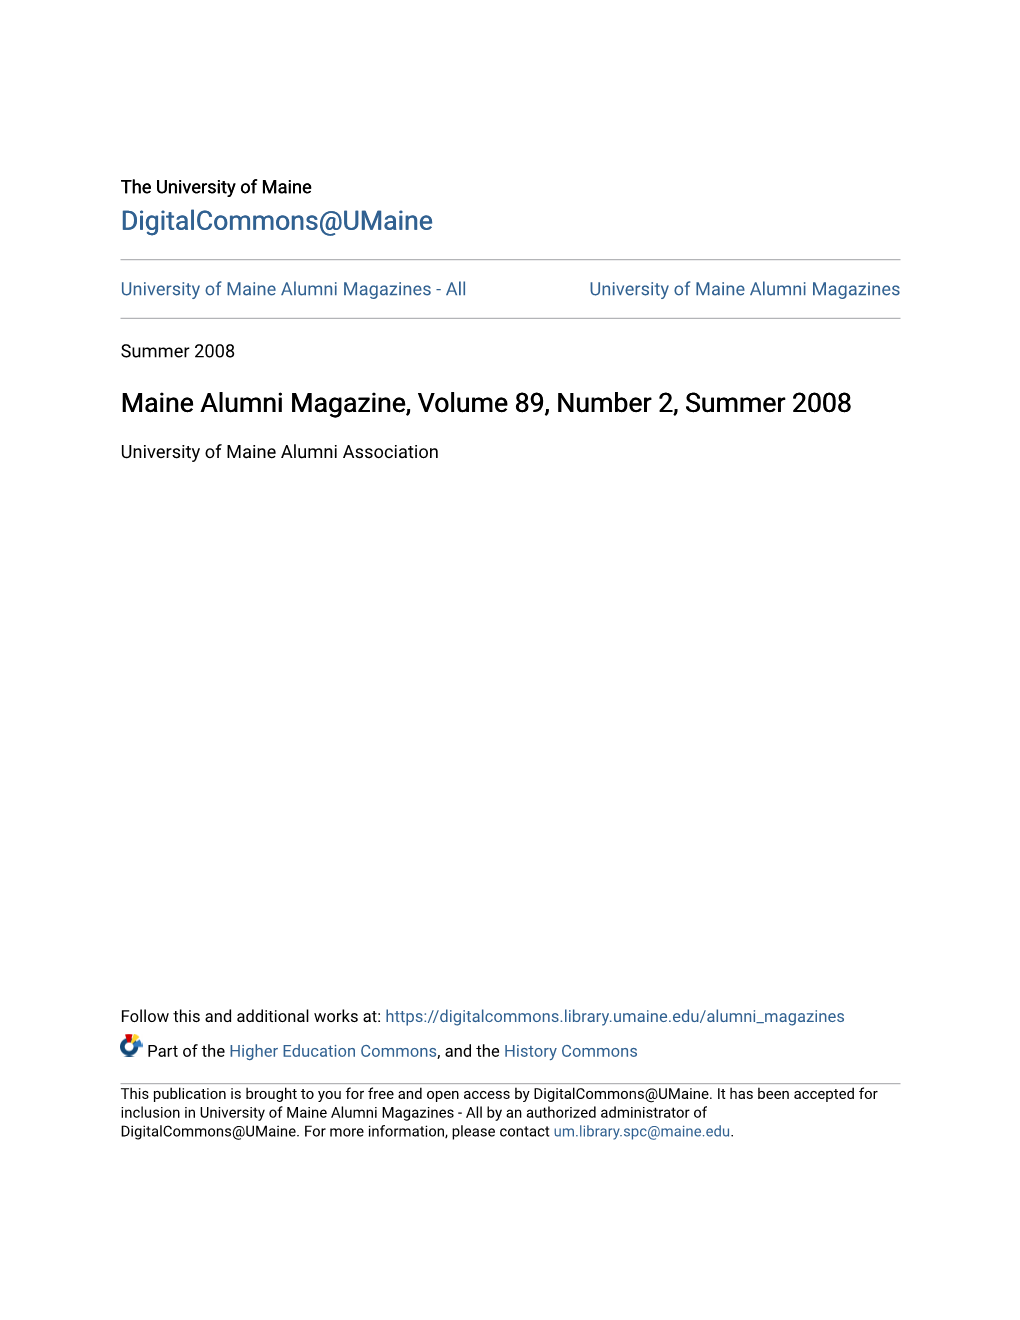 Maine Alumni Magazine, Volume 89, Number 2, Summer 2008